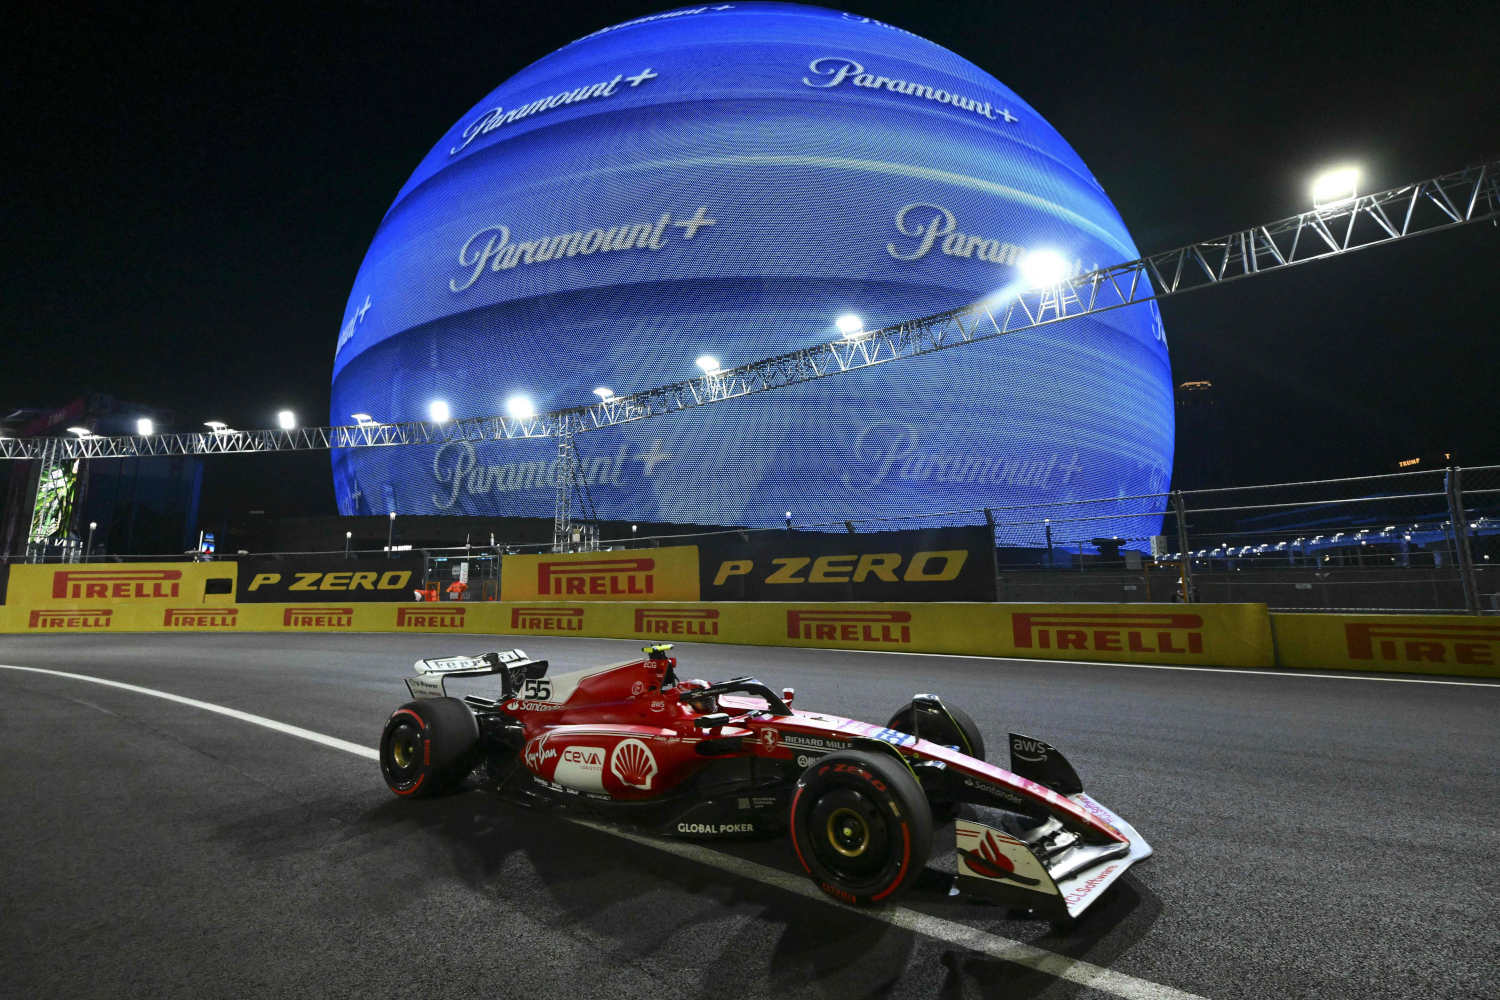 Carlos Sainz at the Formula 1 Las Vegas Grand Prix